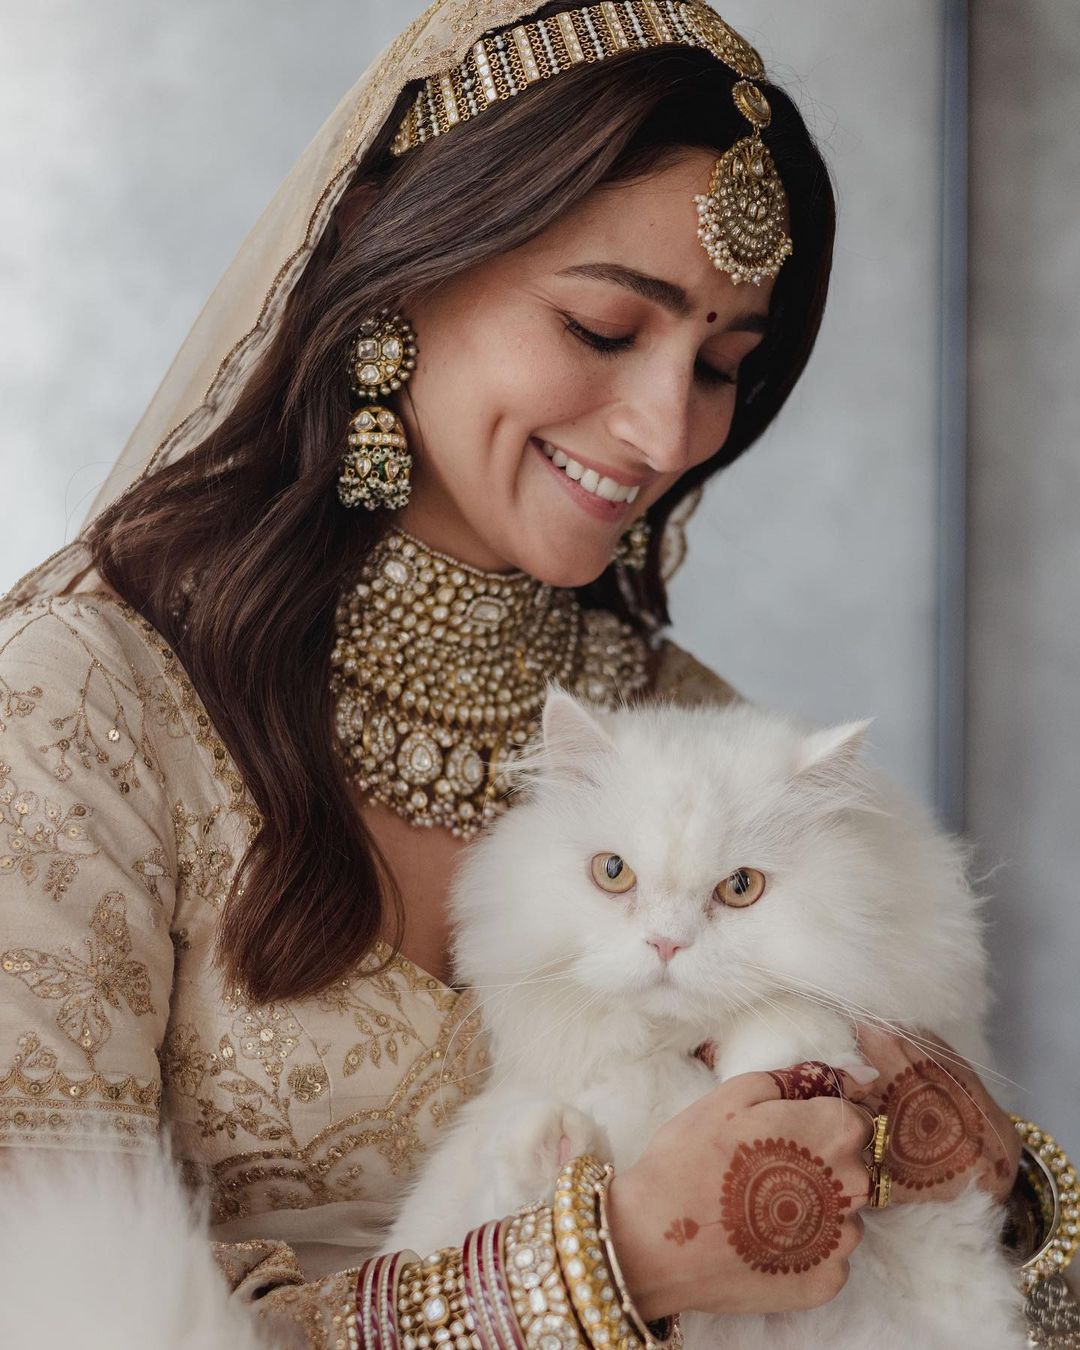 Alia poses with her pet cat